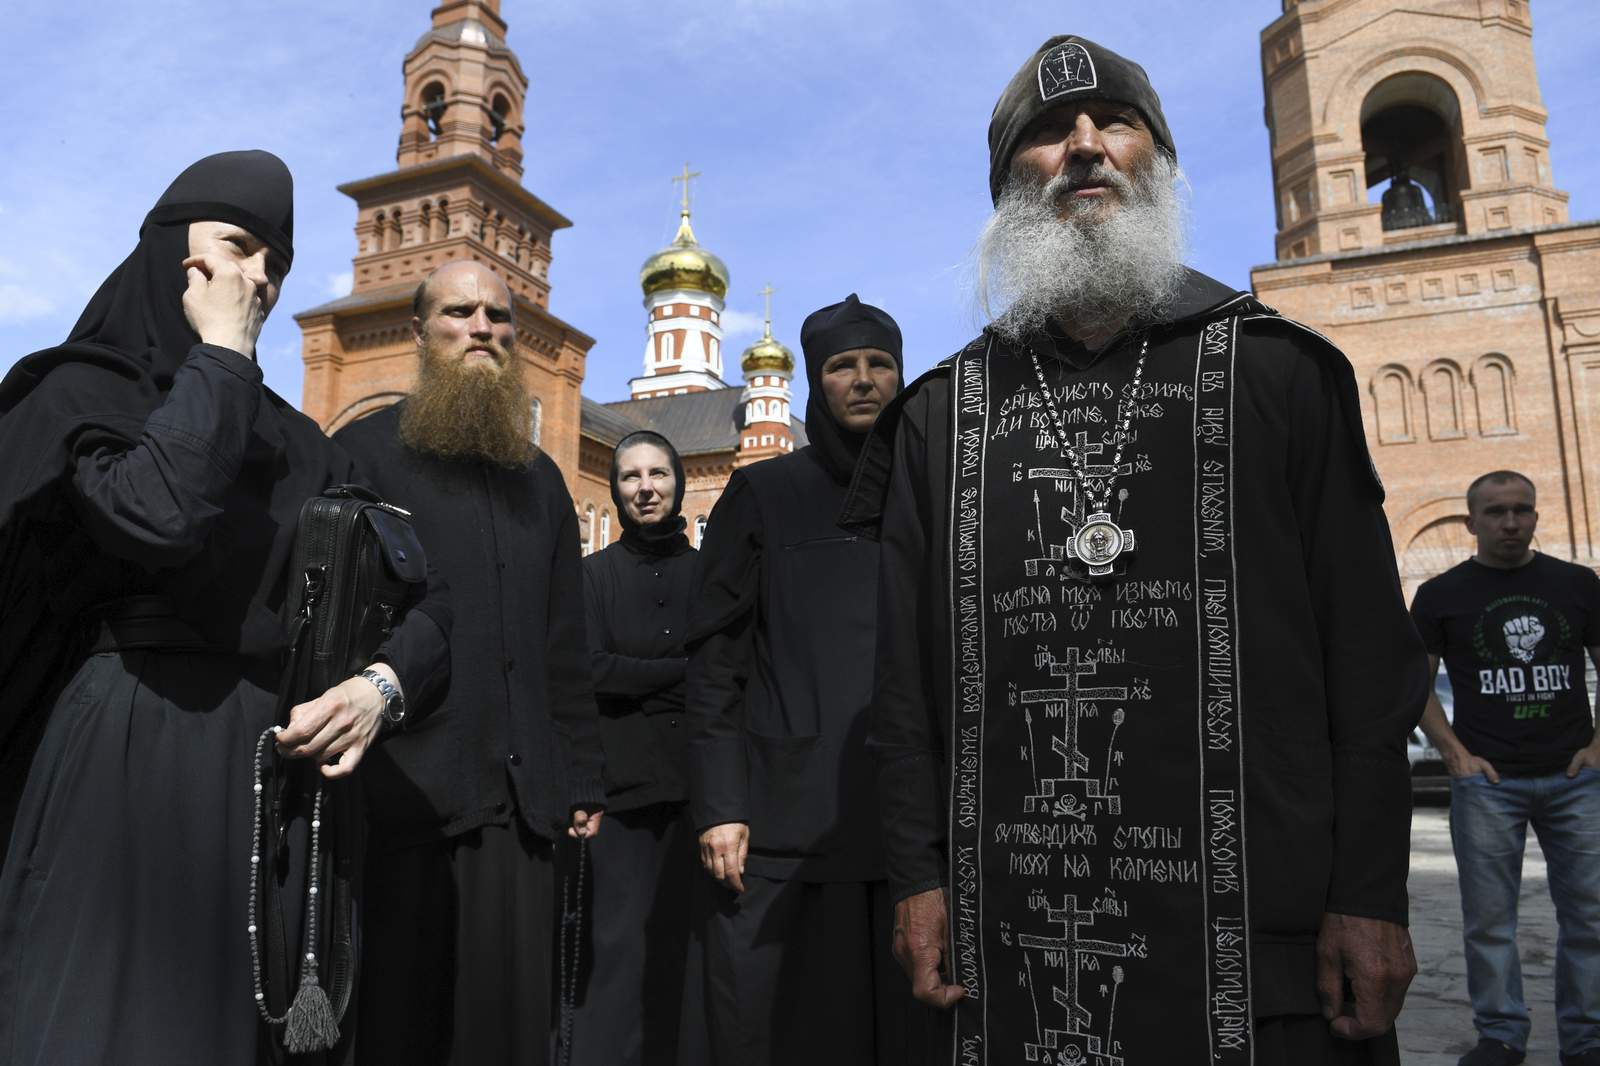 Russian monk denying coronavirus takes control of monastery